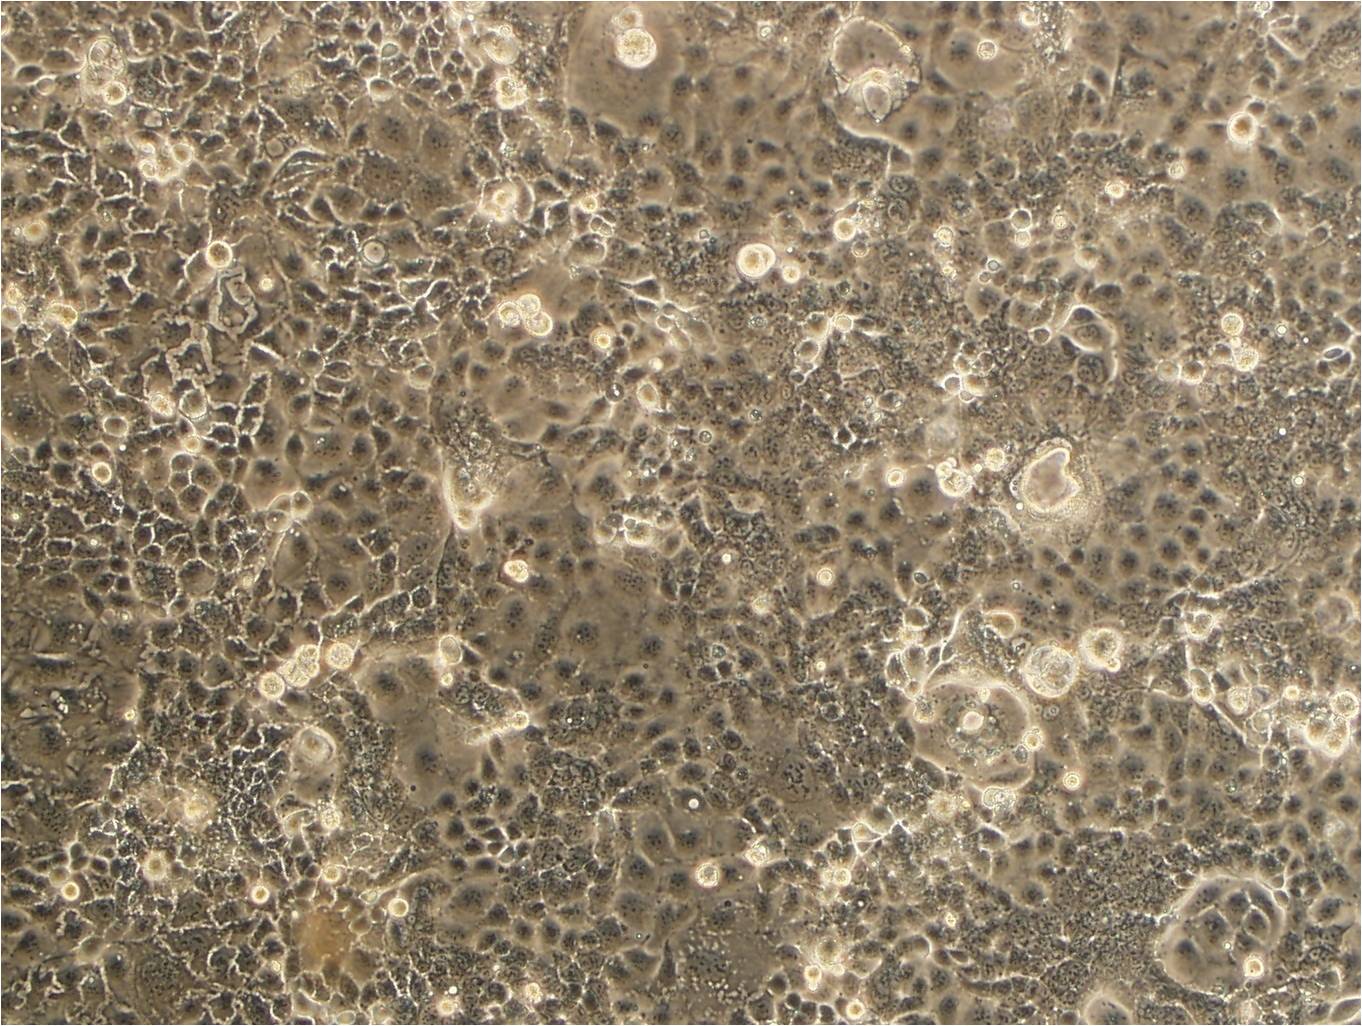 OVISE Cells(赠送Str鉴定报告)|人卵巢癌细胞